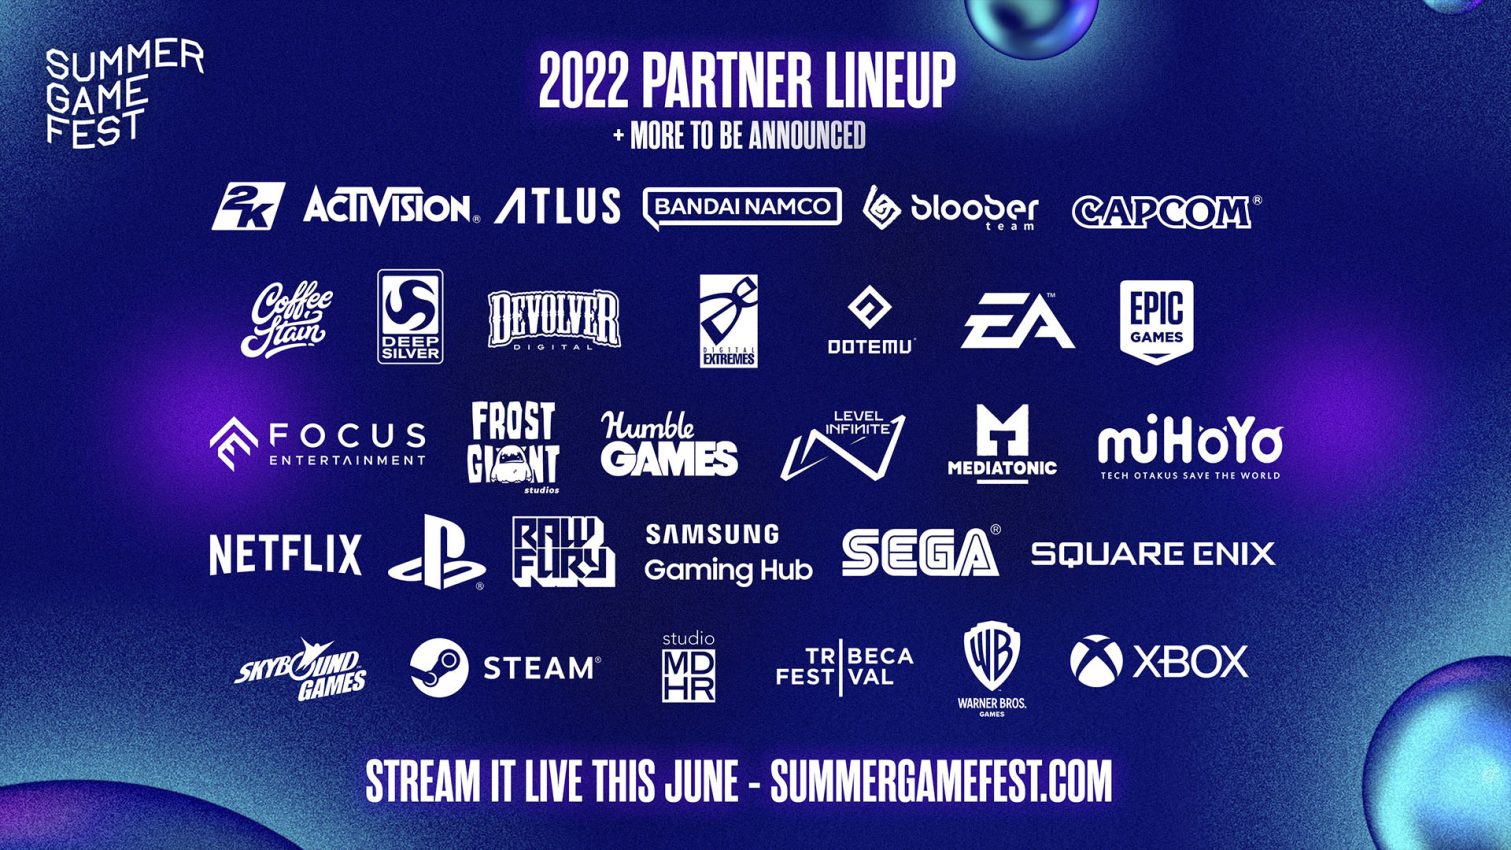 Summer Game Fest 2022 - Partner Lineup